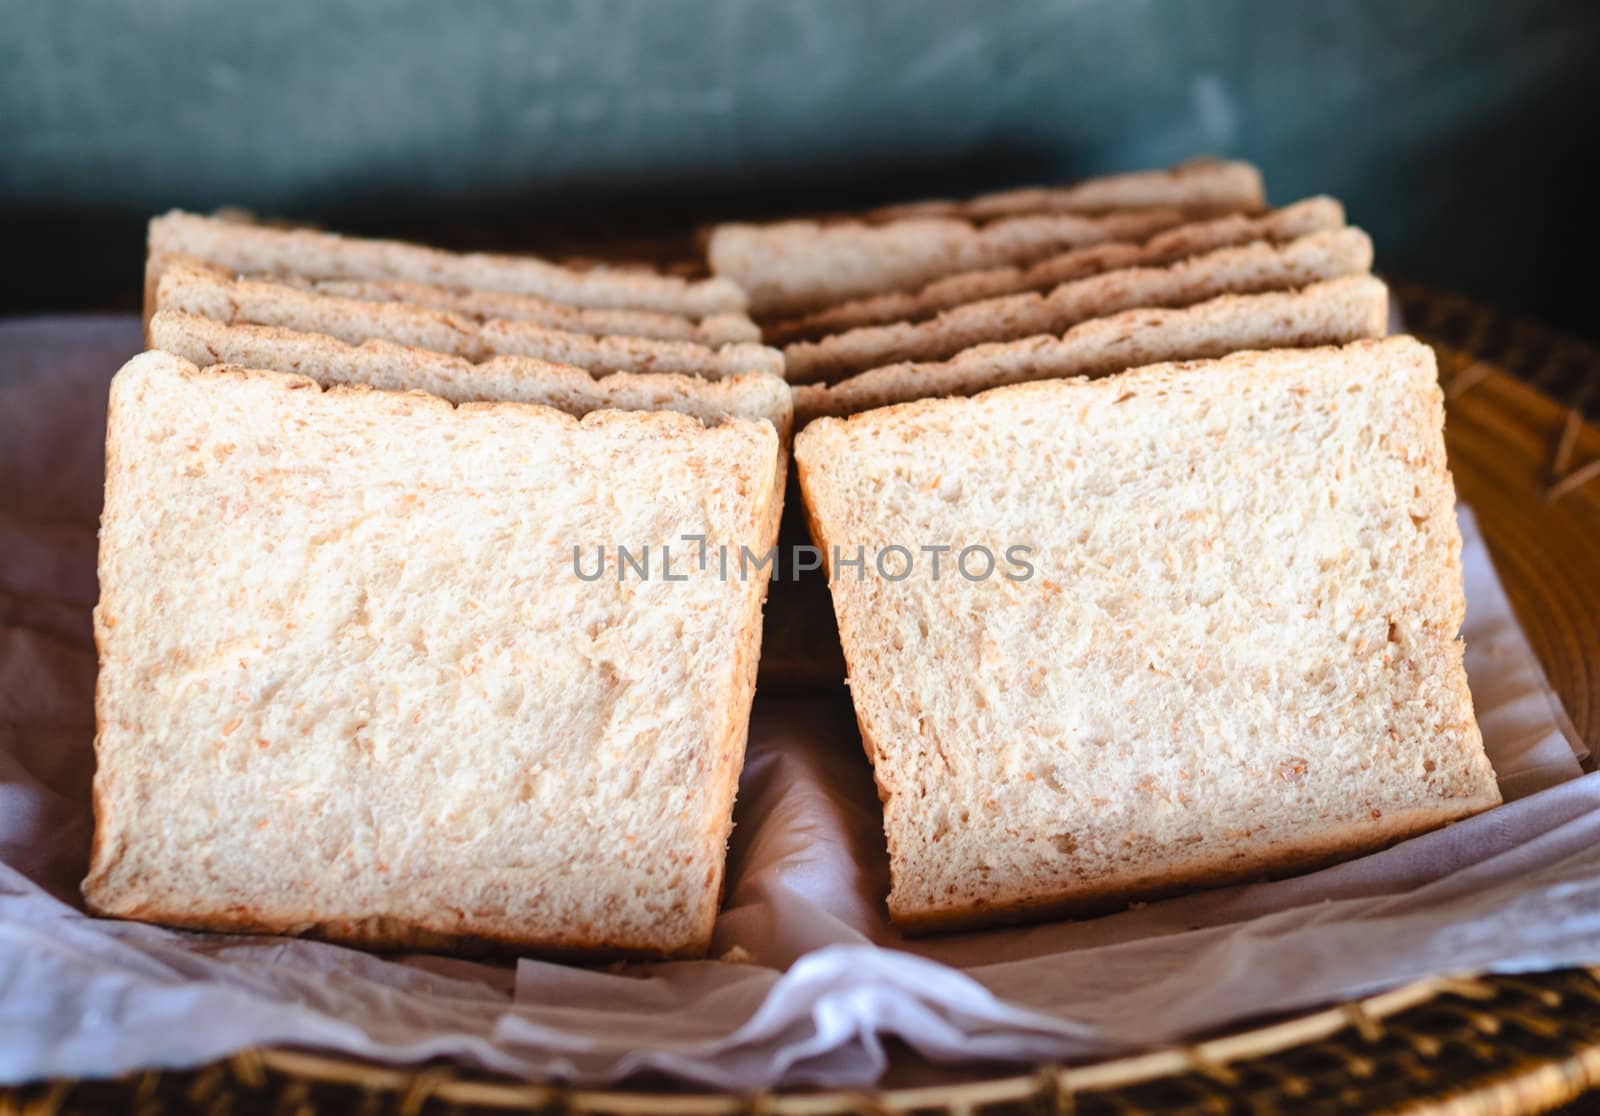 Closeup of sliced bread